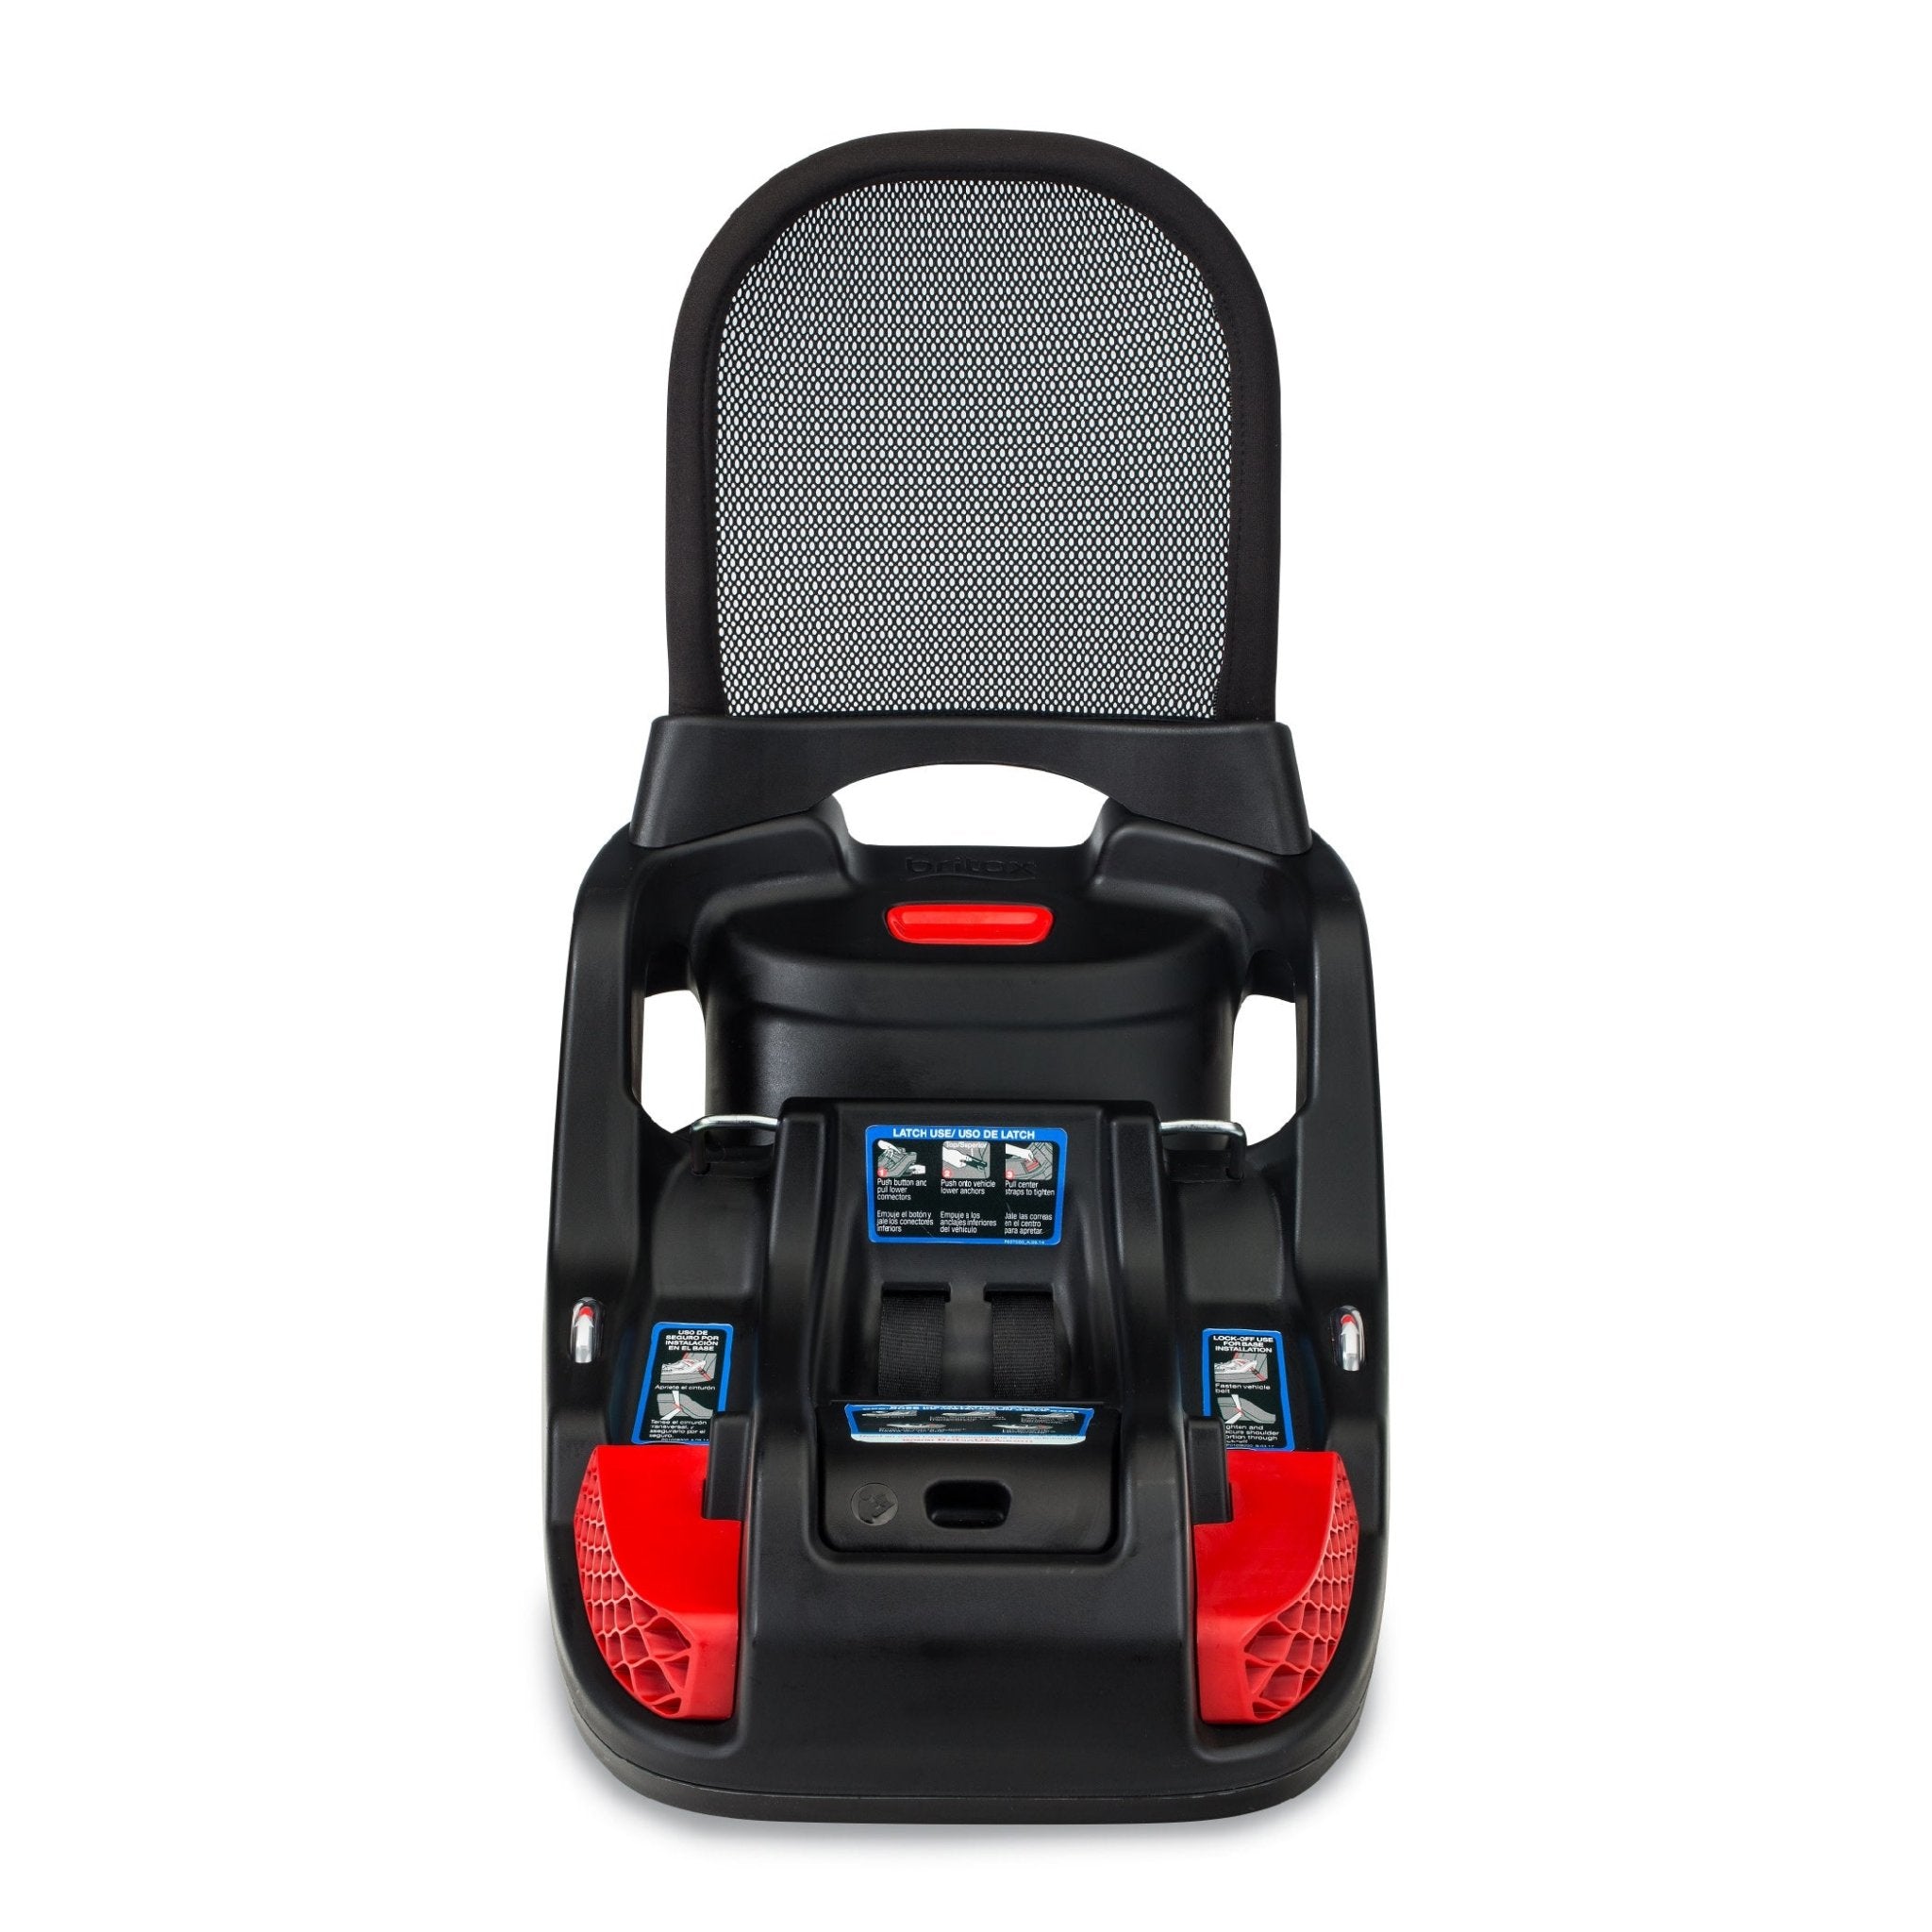 Britax B-Safe Gen2 FlexFit + Safewash Car Seat, -- ANB Baby